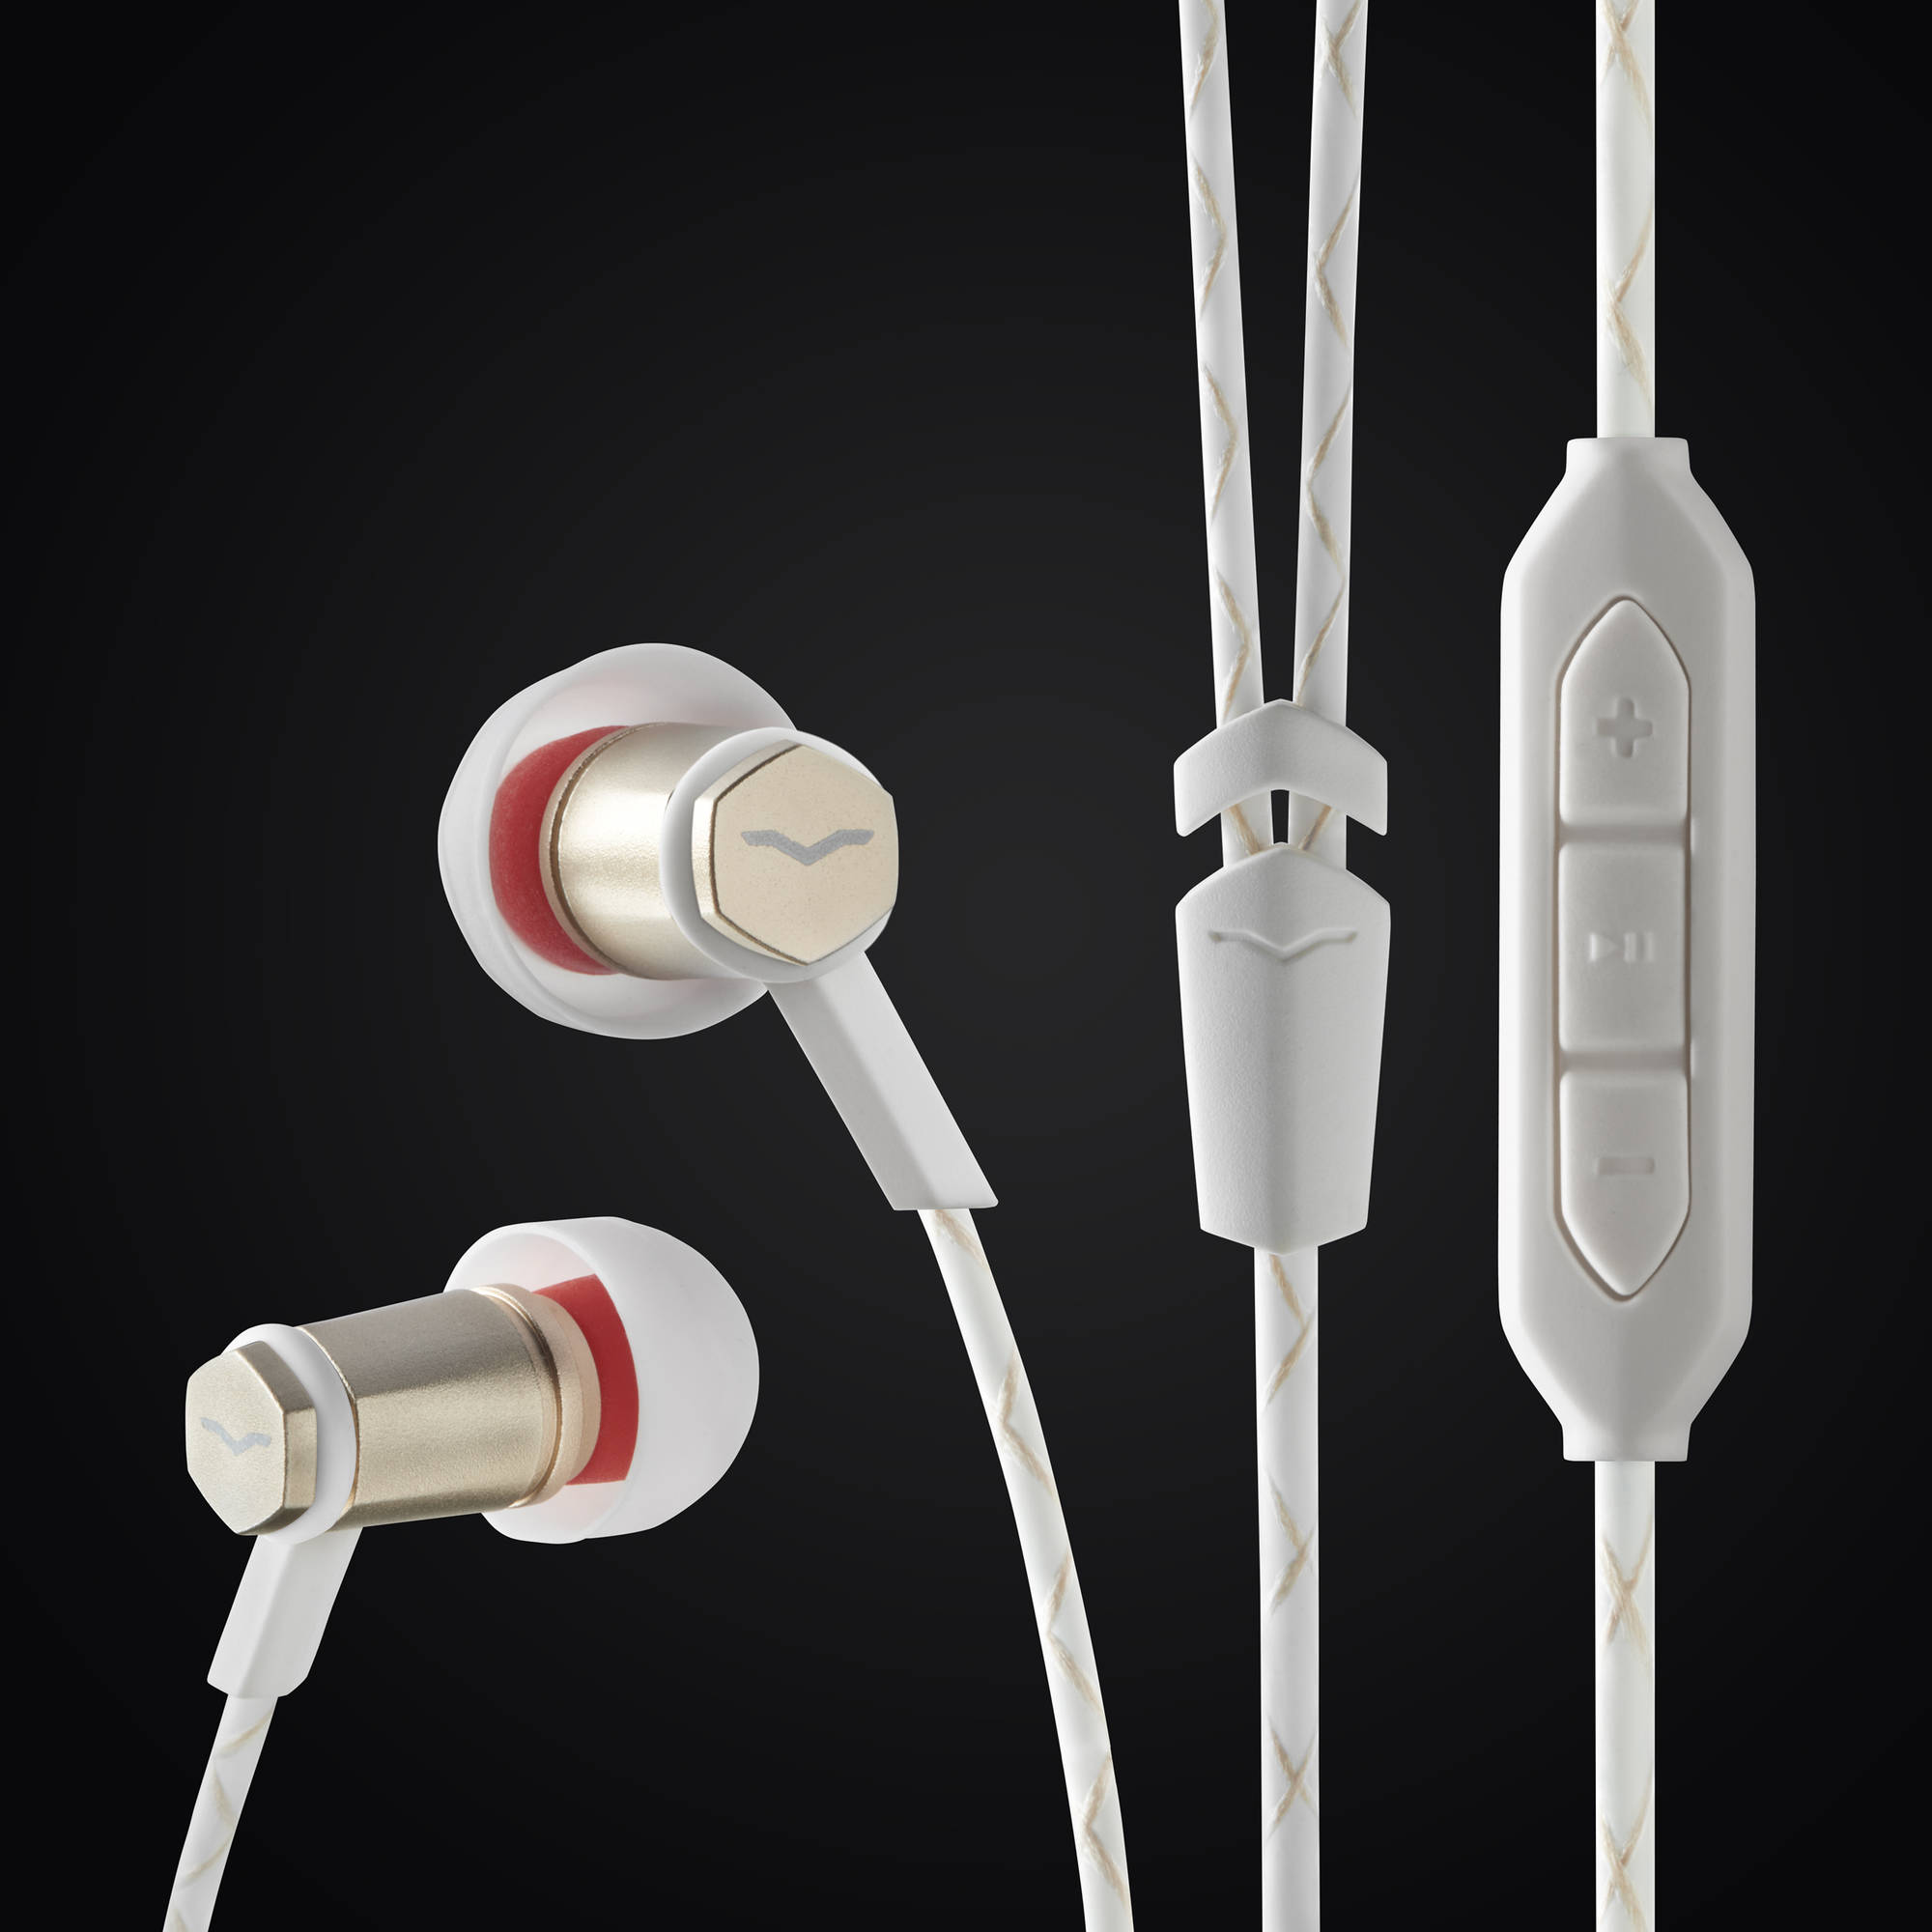 Auriculares internos V-MODA Forza Metallo con micrófono en línea y control remoto (Apple iOS, oro...